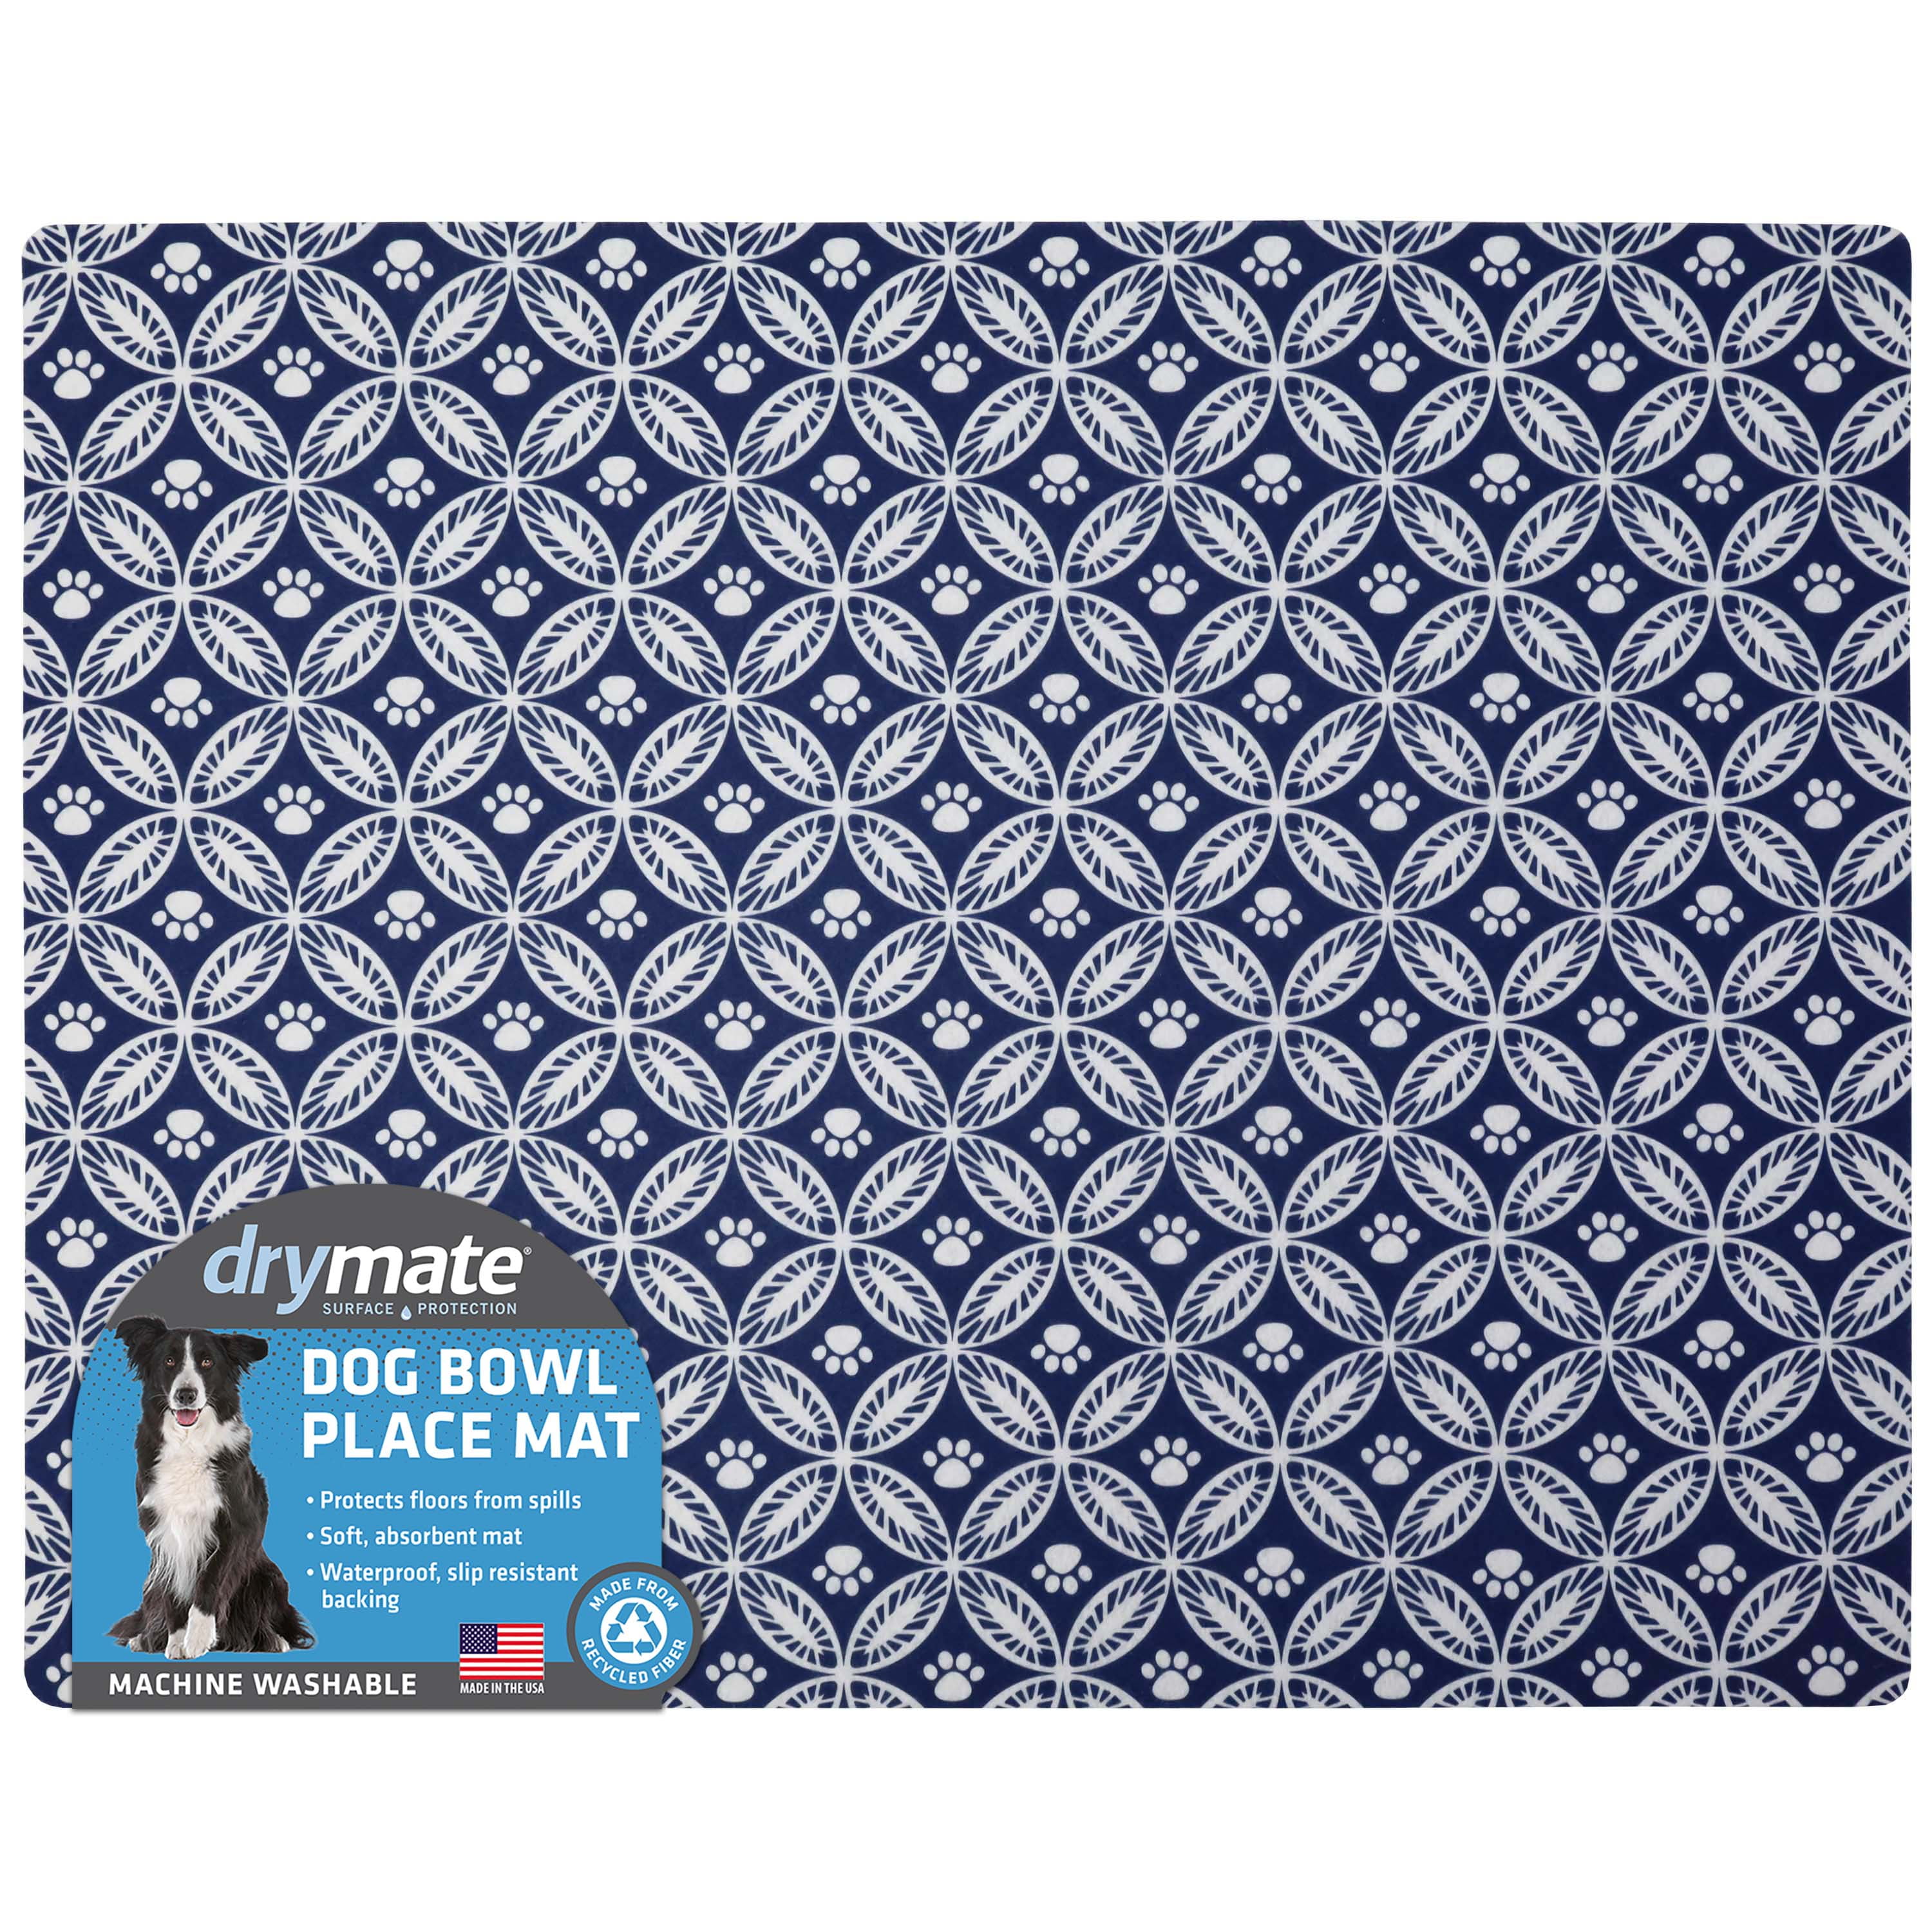 Drymate 19x24 Dish Drying Mat - Light Blue Floral : Target